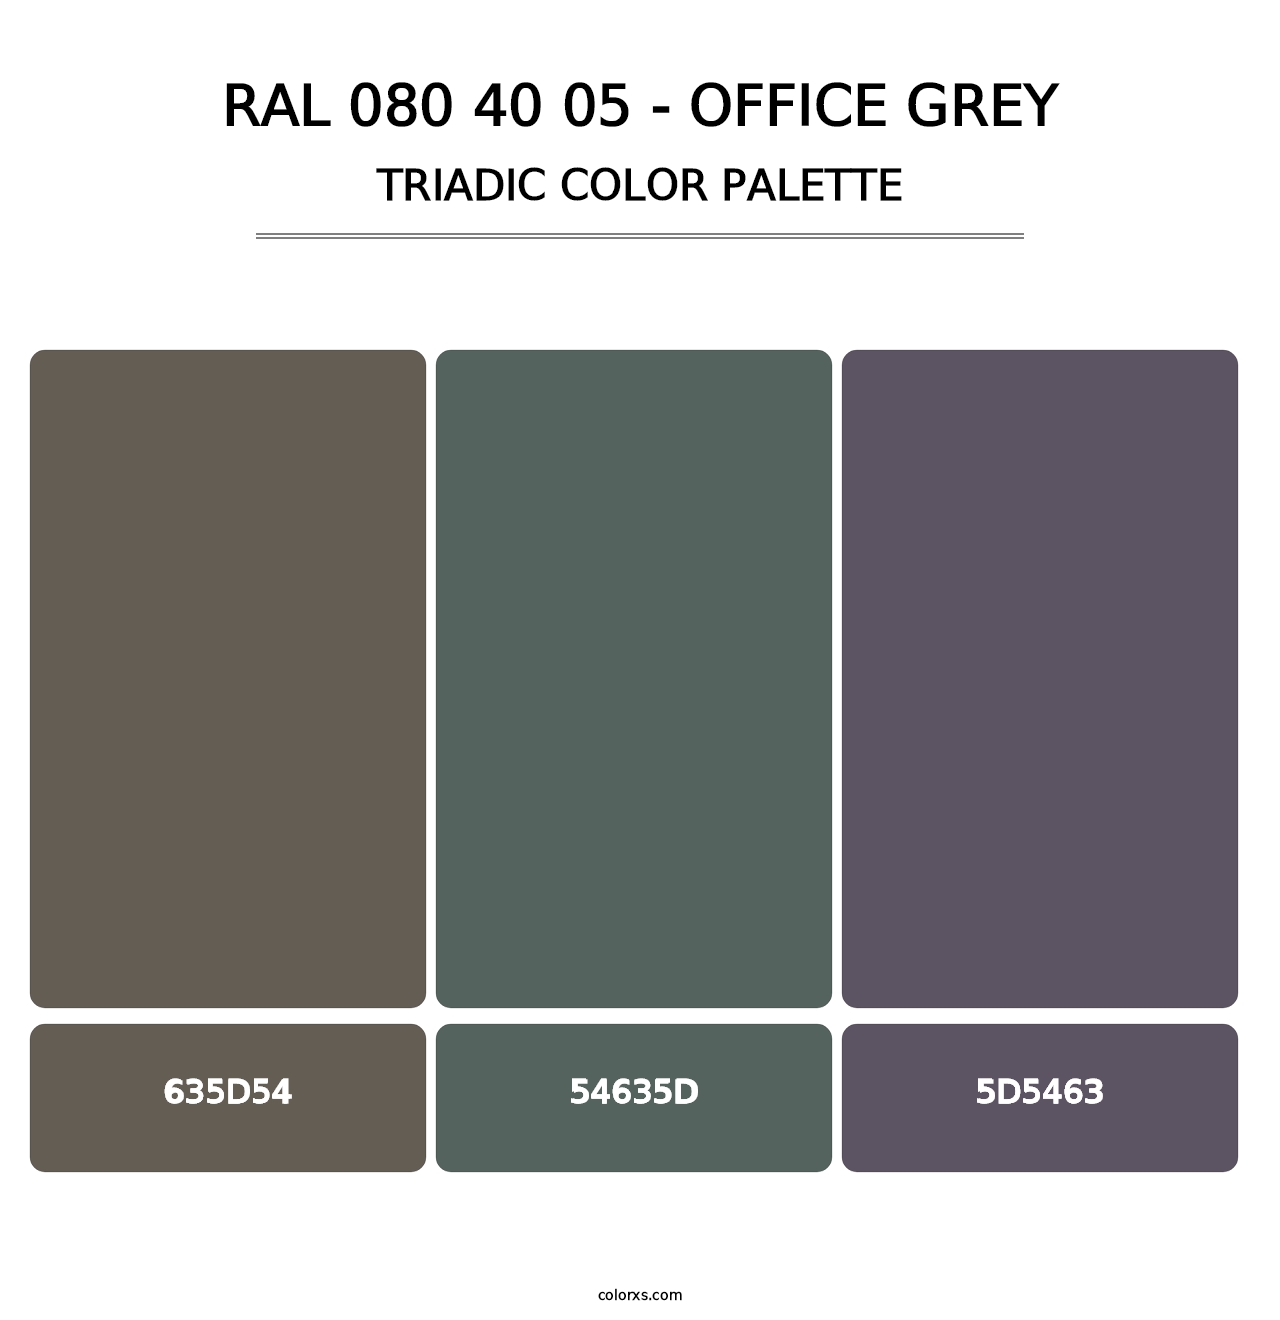 RAL 080 40 05 - Office Grey - Triadic Color Palette